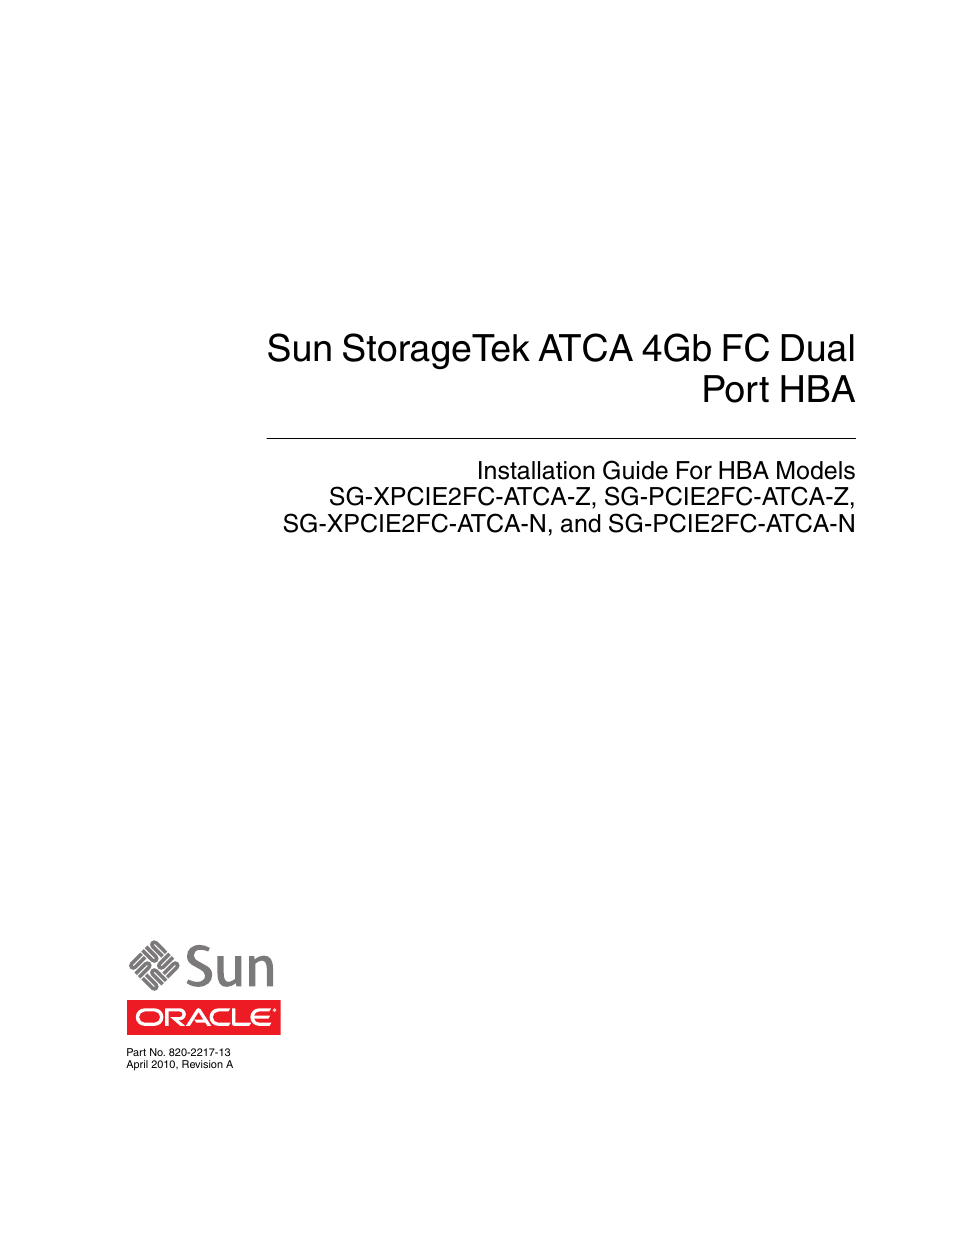 Oracle Audio Technologies Sun StorageTek ATCA 4Gb FC Dual Port HBA SG-XPCIE2FC-ATCA-Z User Manual | 48 pages